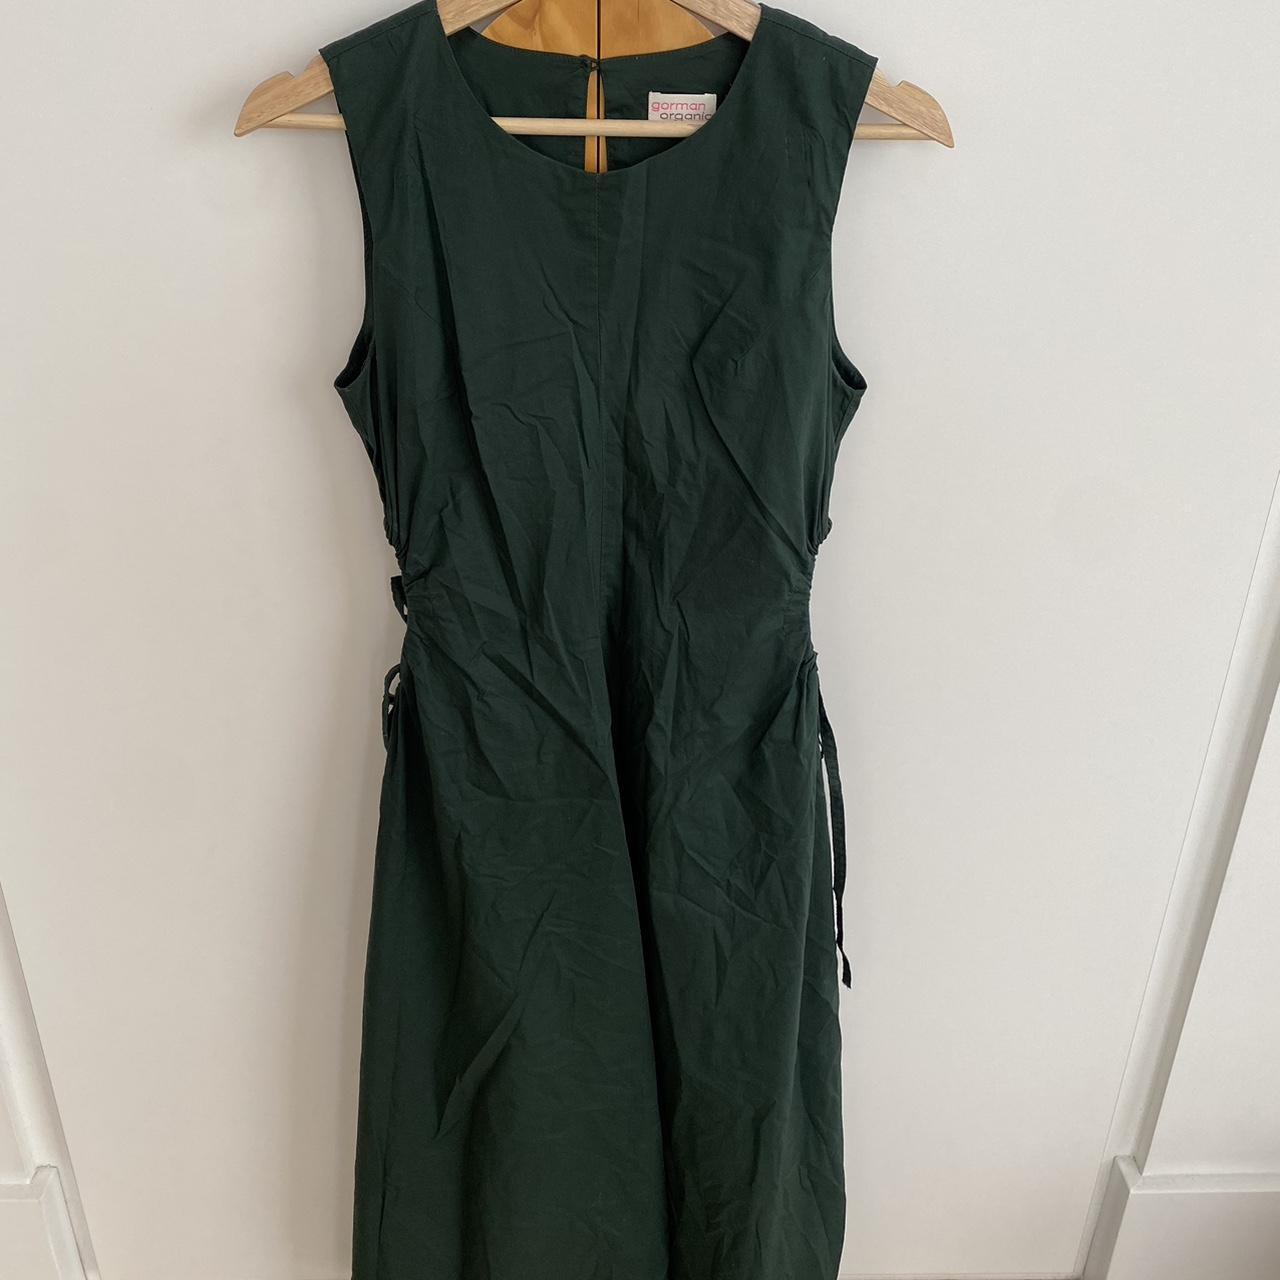 Stunning Gorman Midi Dress Size 8 - Depop